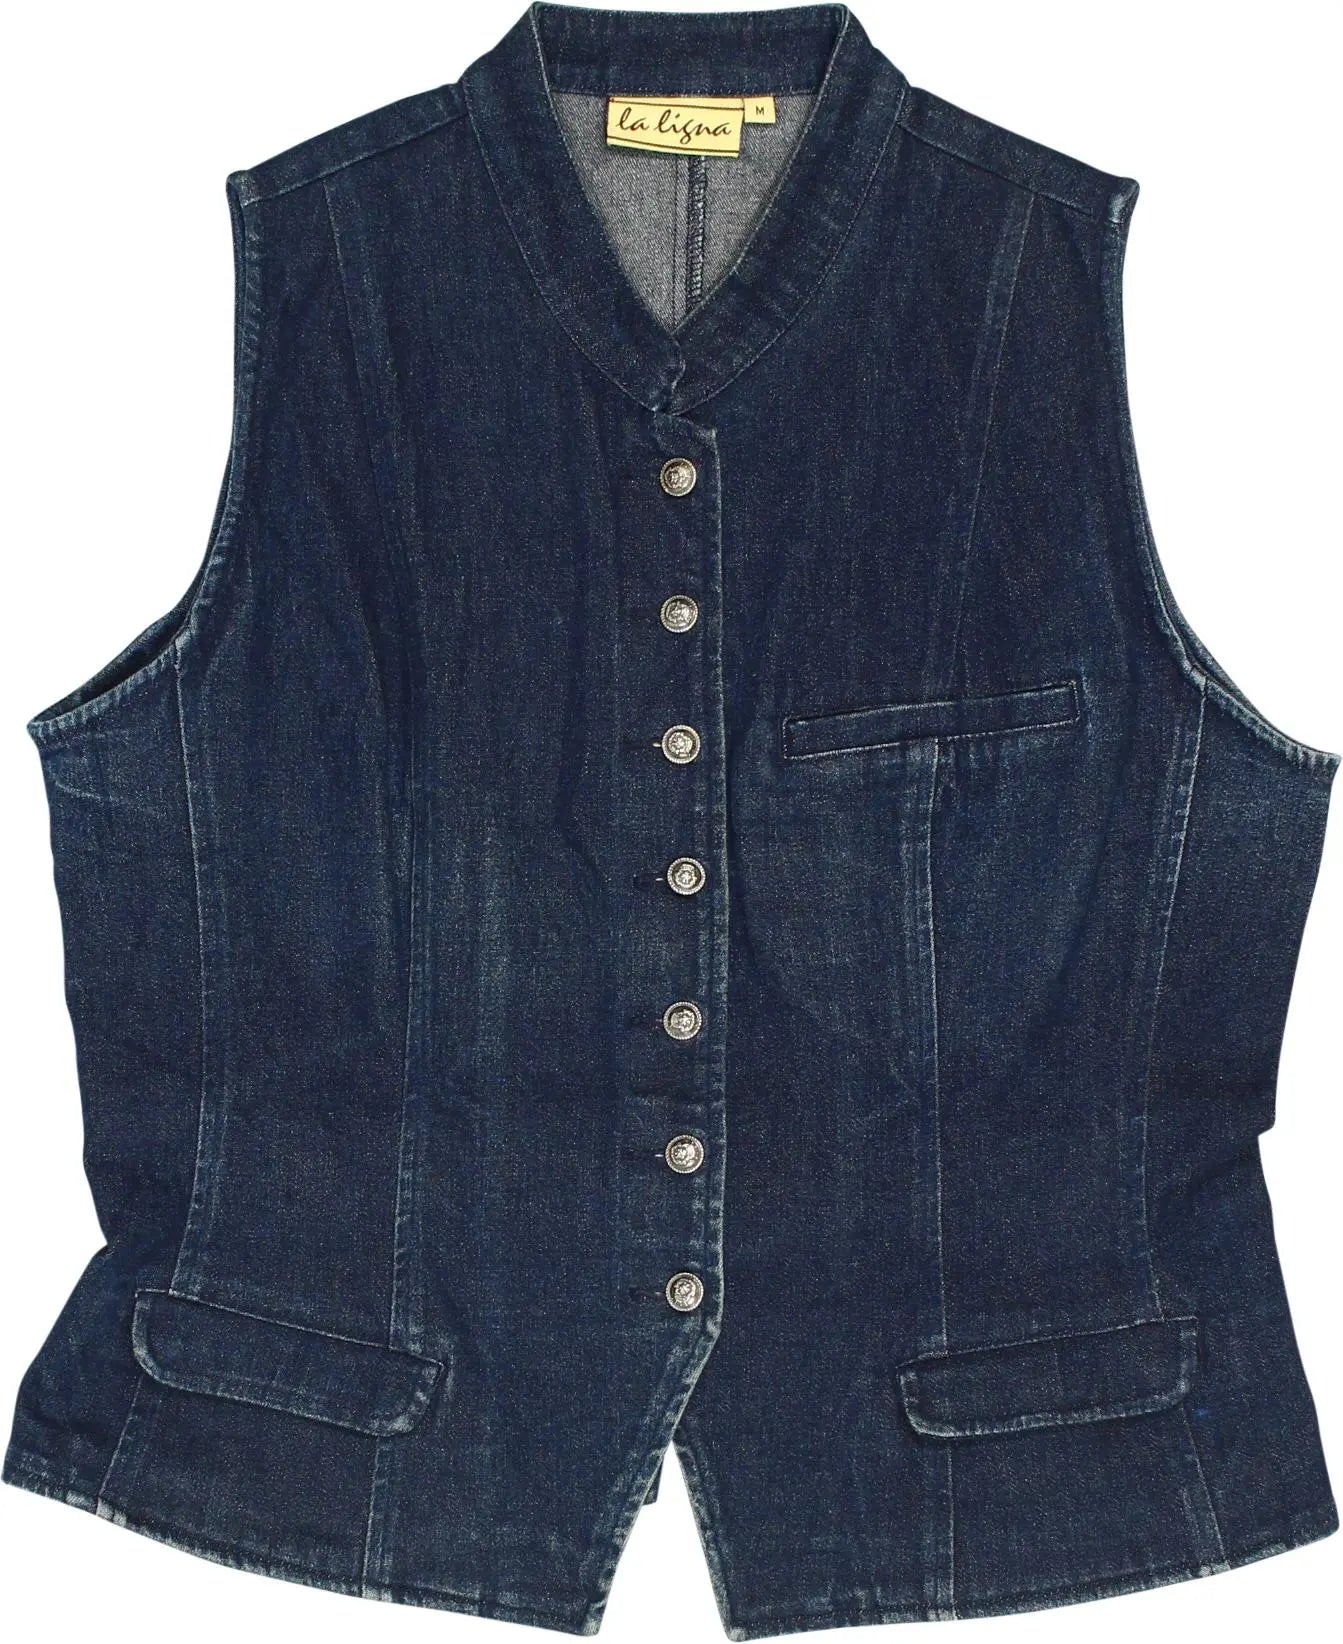 La Lisna - Denim Jacket- ThriftTale.com - Vintage and second handclothing